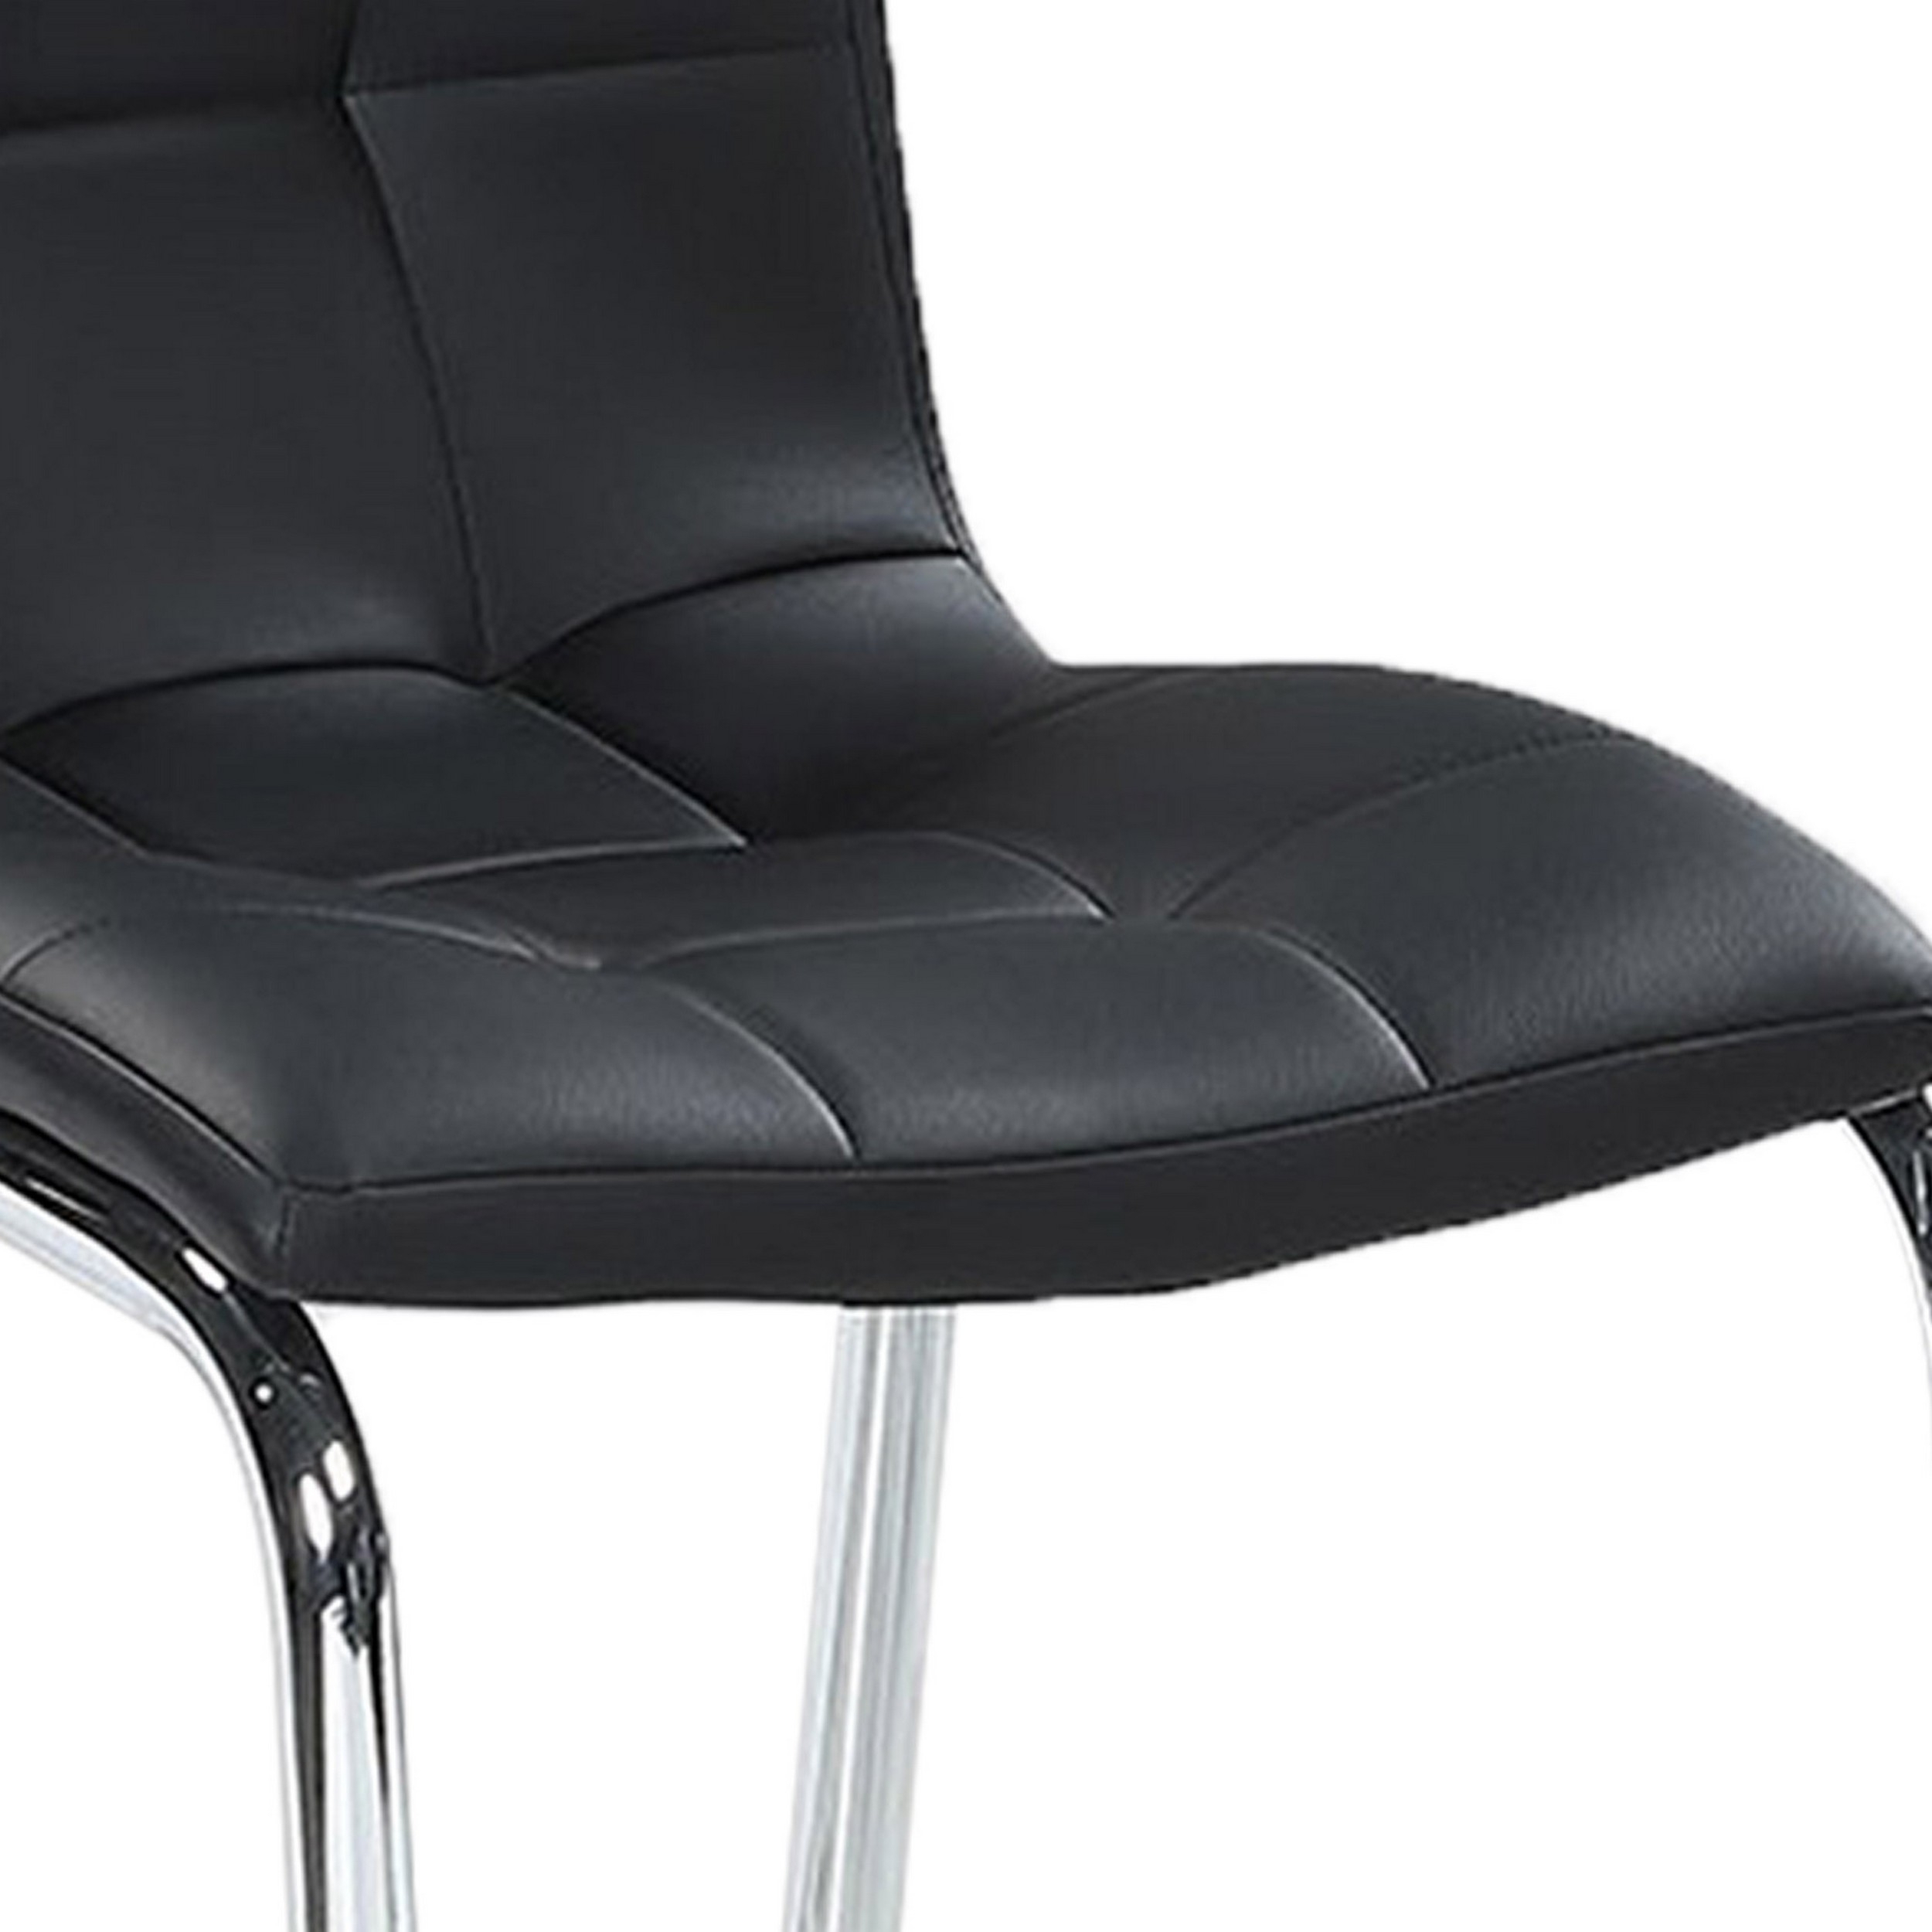 Jolie 18 Inch Side Chair Set Of 4, Metal Legs, Tufted Faux Leather, Black -Saltoro Sherpi